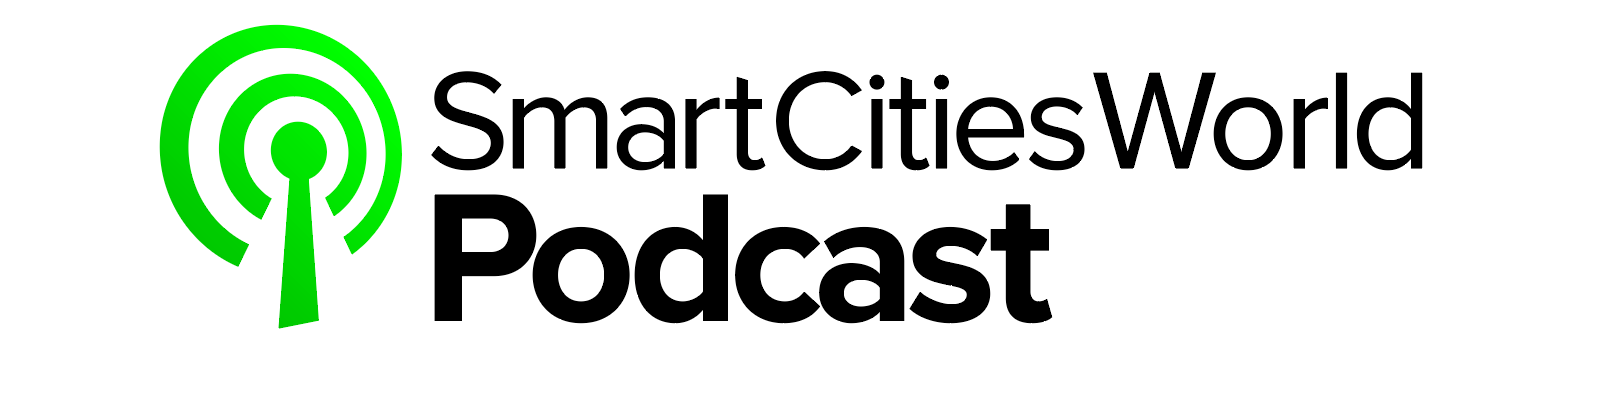 SmartCitiesWorld Podcast